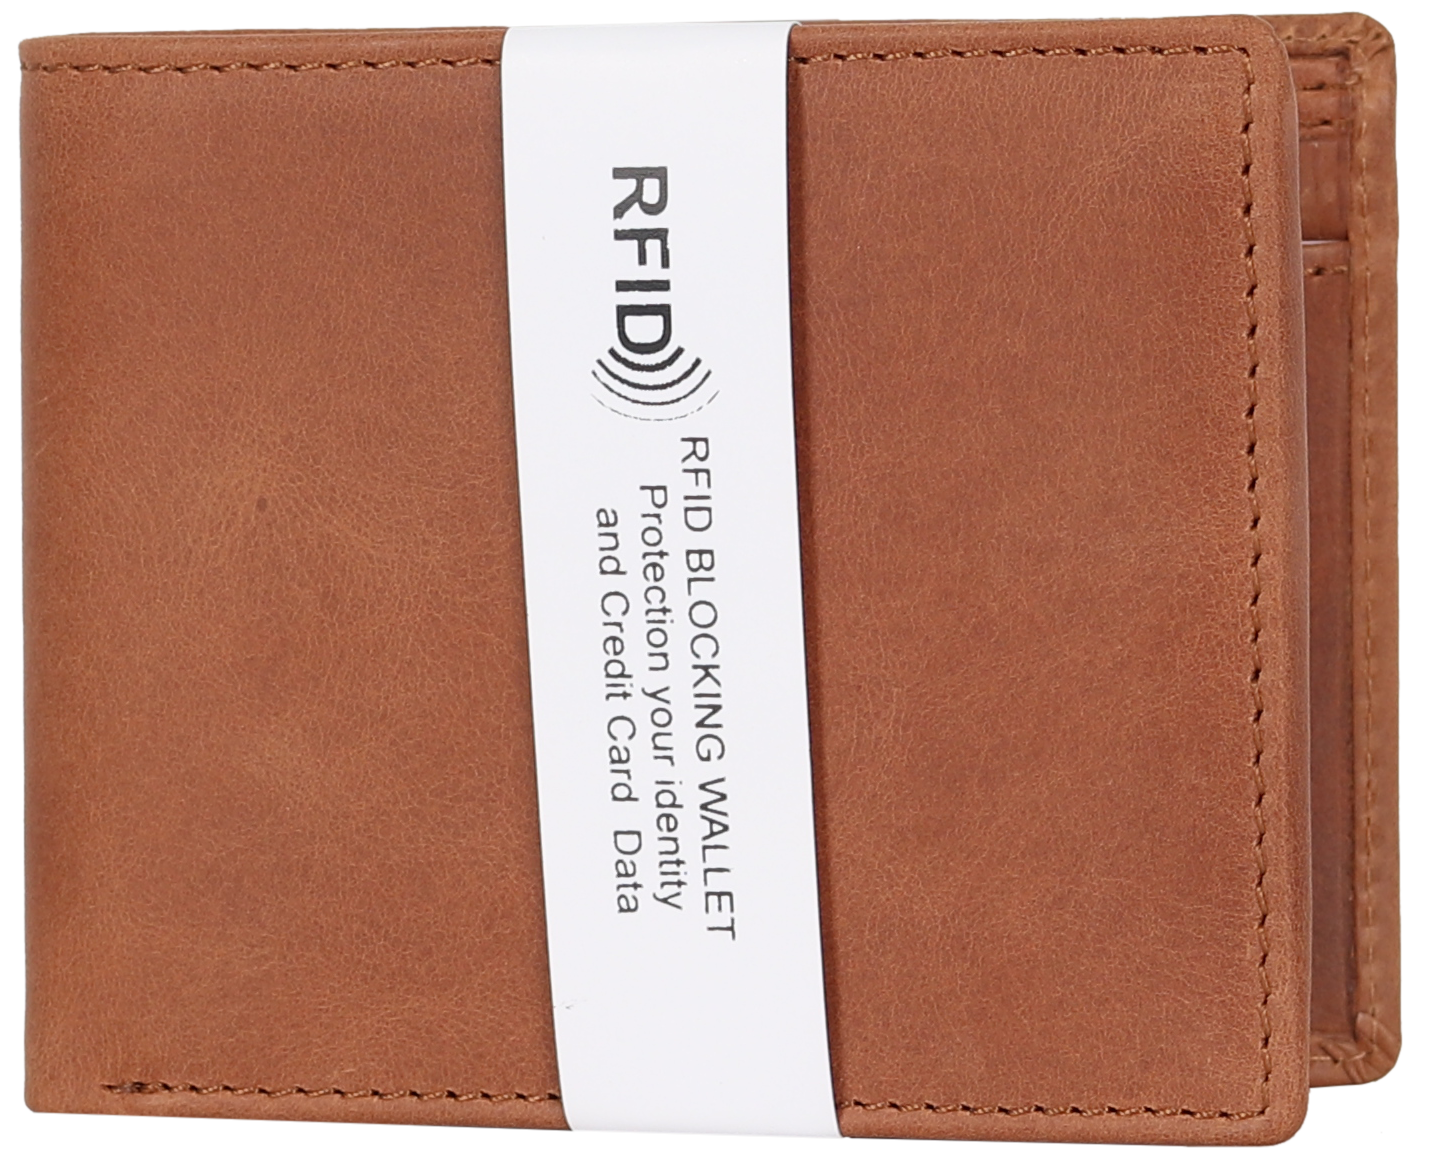 Men's 8 Card Slot Leather Wallet